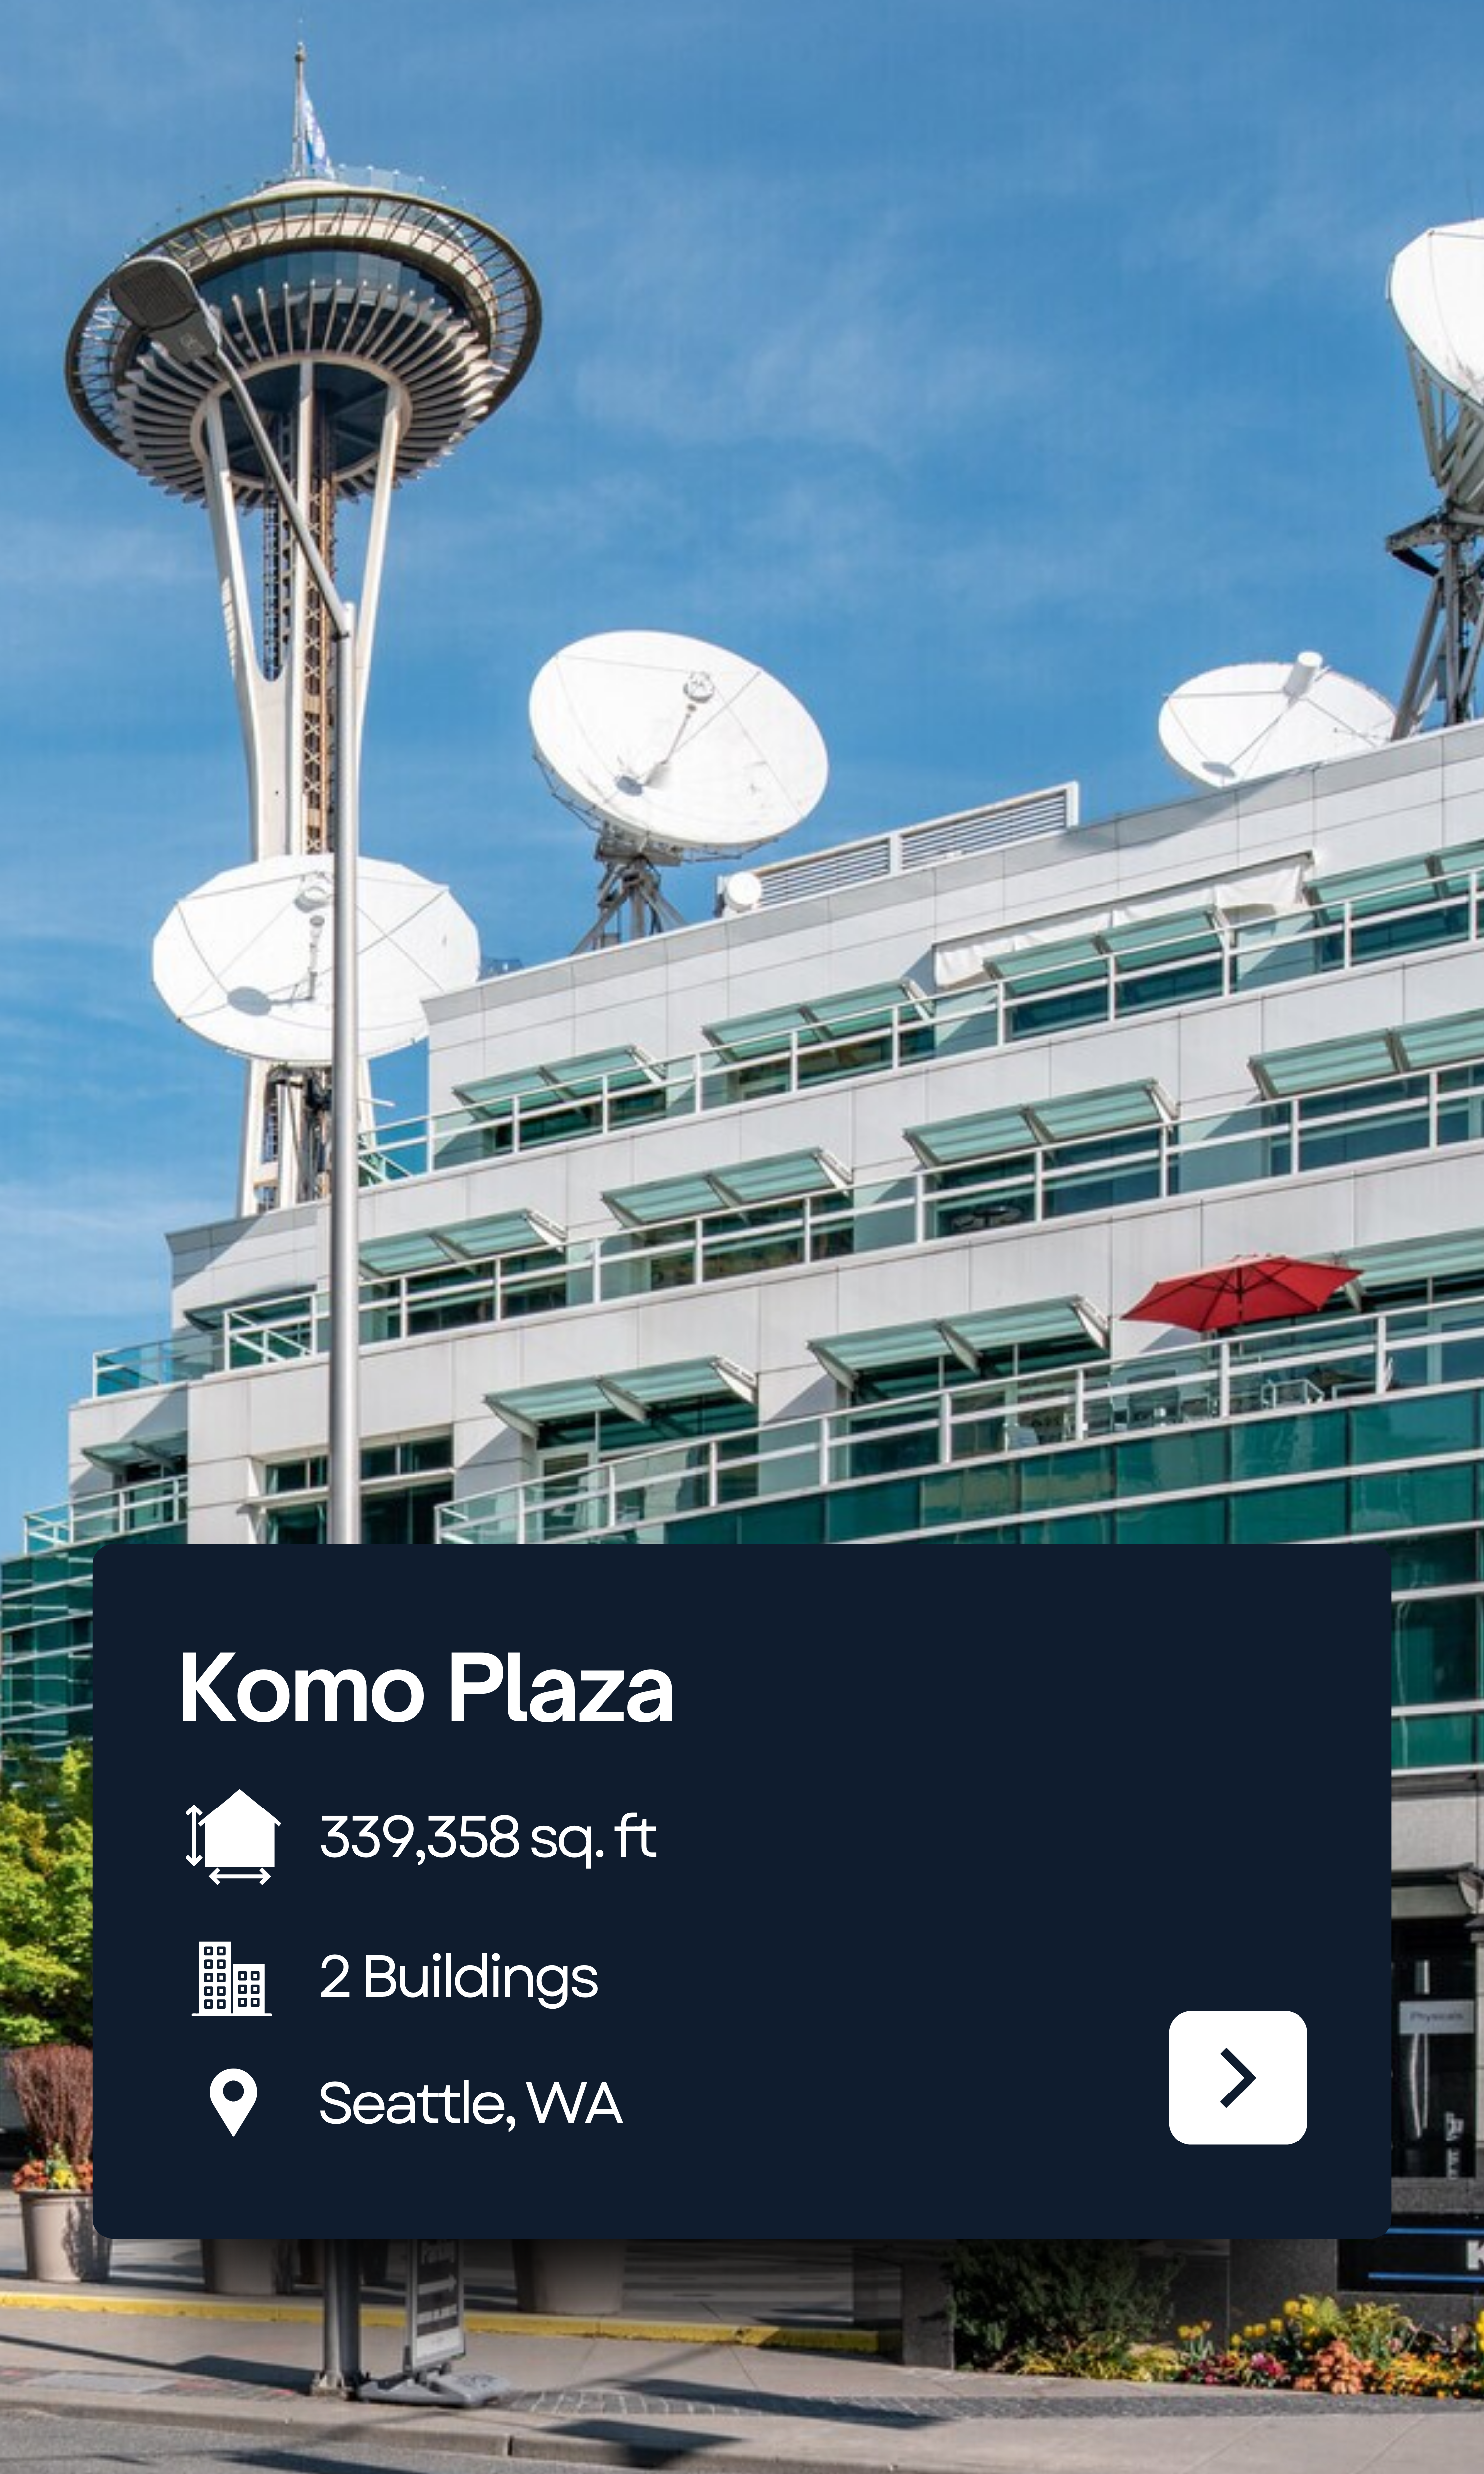 Komo Plaza Seattle, WA (At City Center next to the iconic Seattle Space Needle)